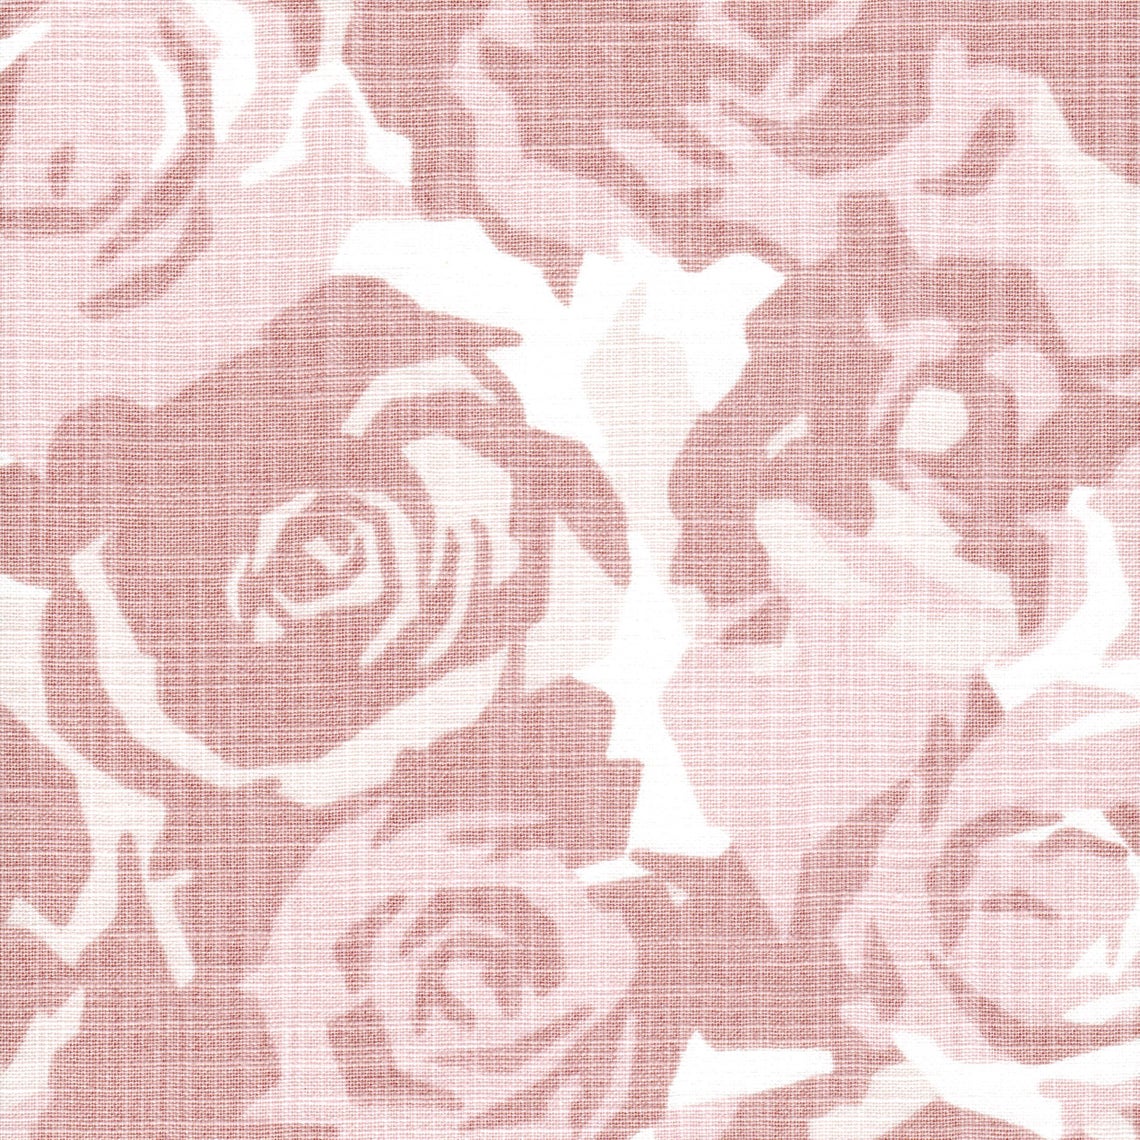 decorative pillows in farrah blush floral